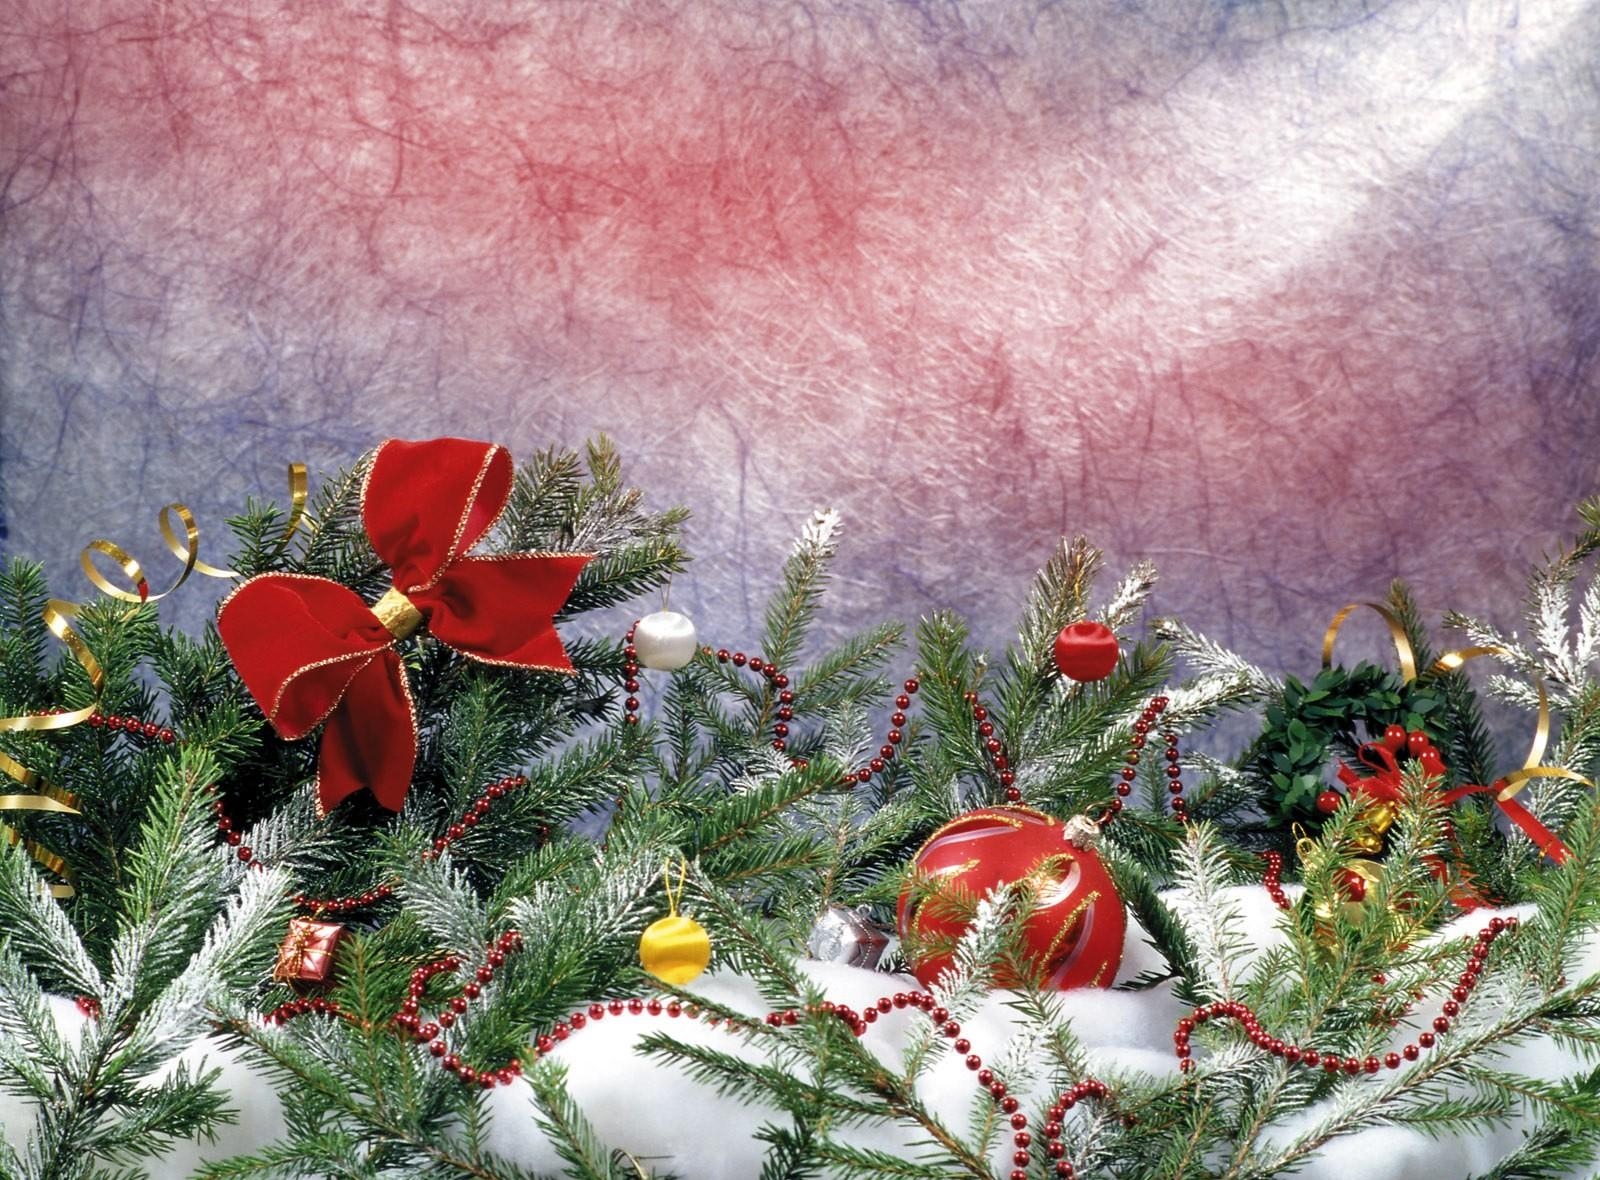 holidays, decorations, snow, holiday, needles, attributes